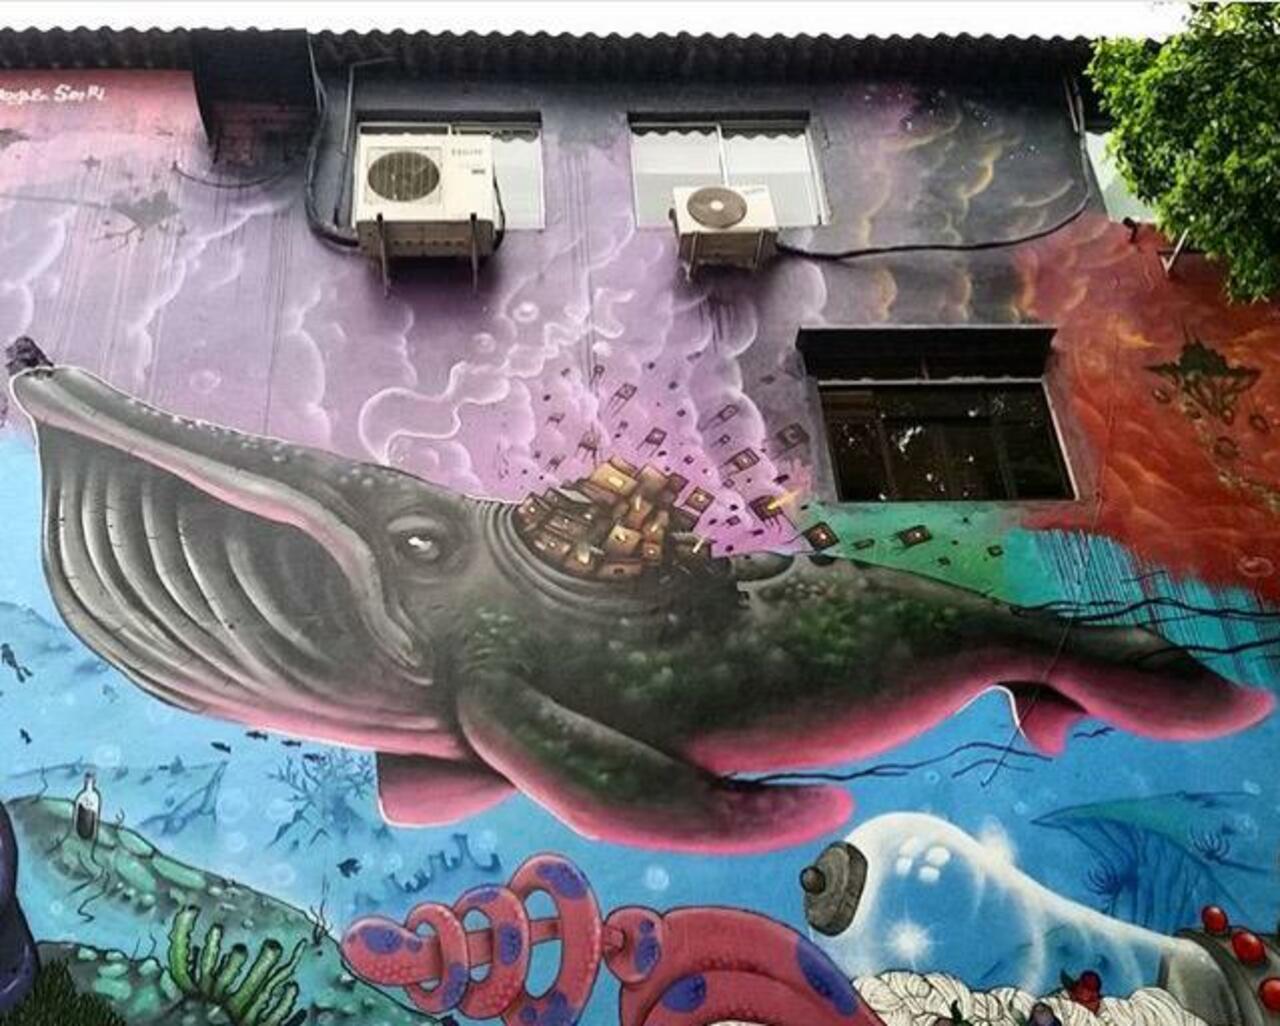 Street Art by joks_johnes Pinheiros, São Paulo 

#art #mural #graffiti #streetart http://t.co/QImxDbR2u1